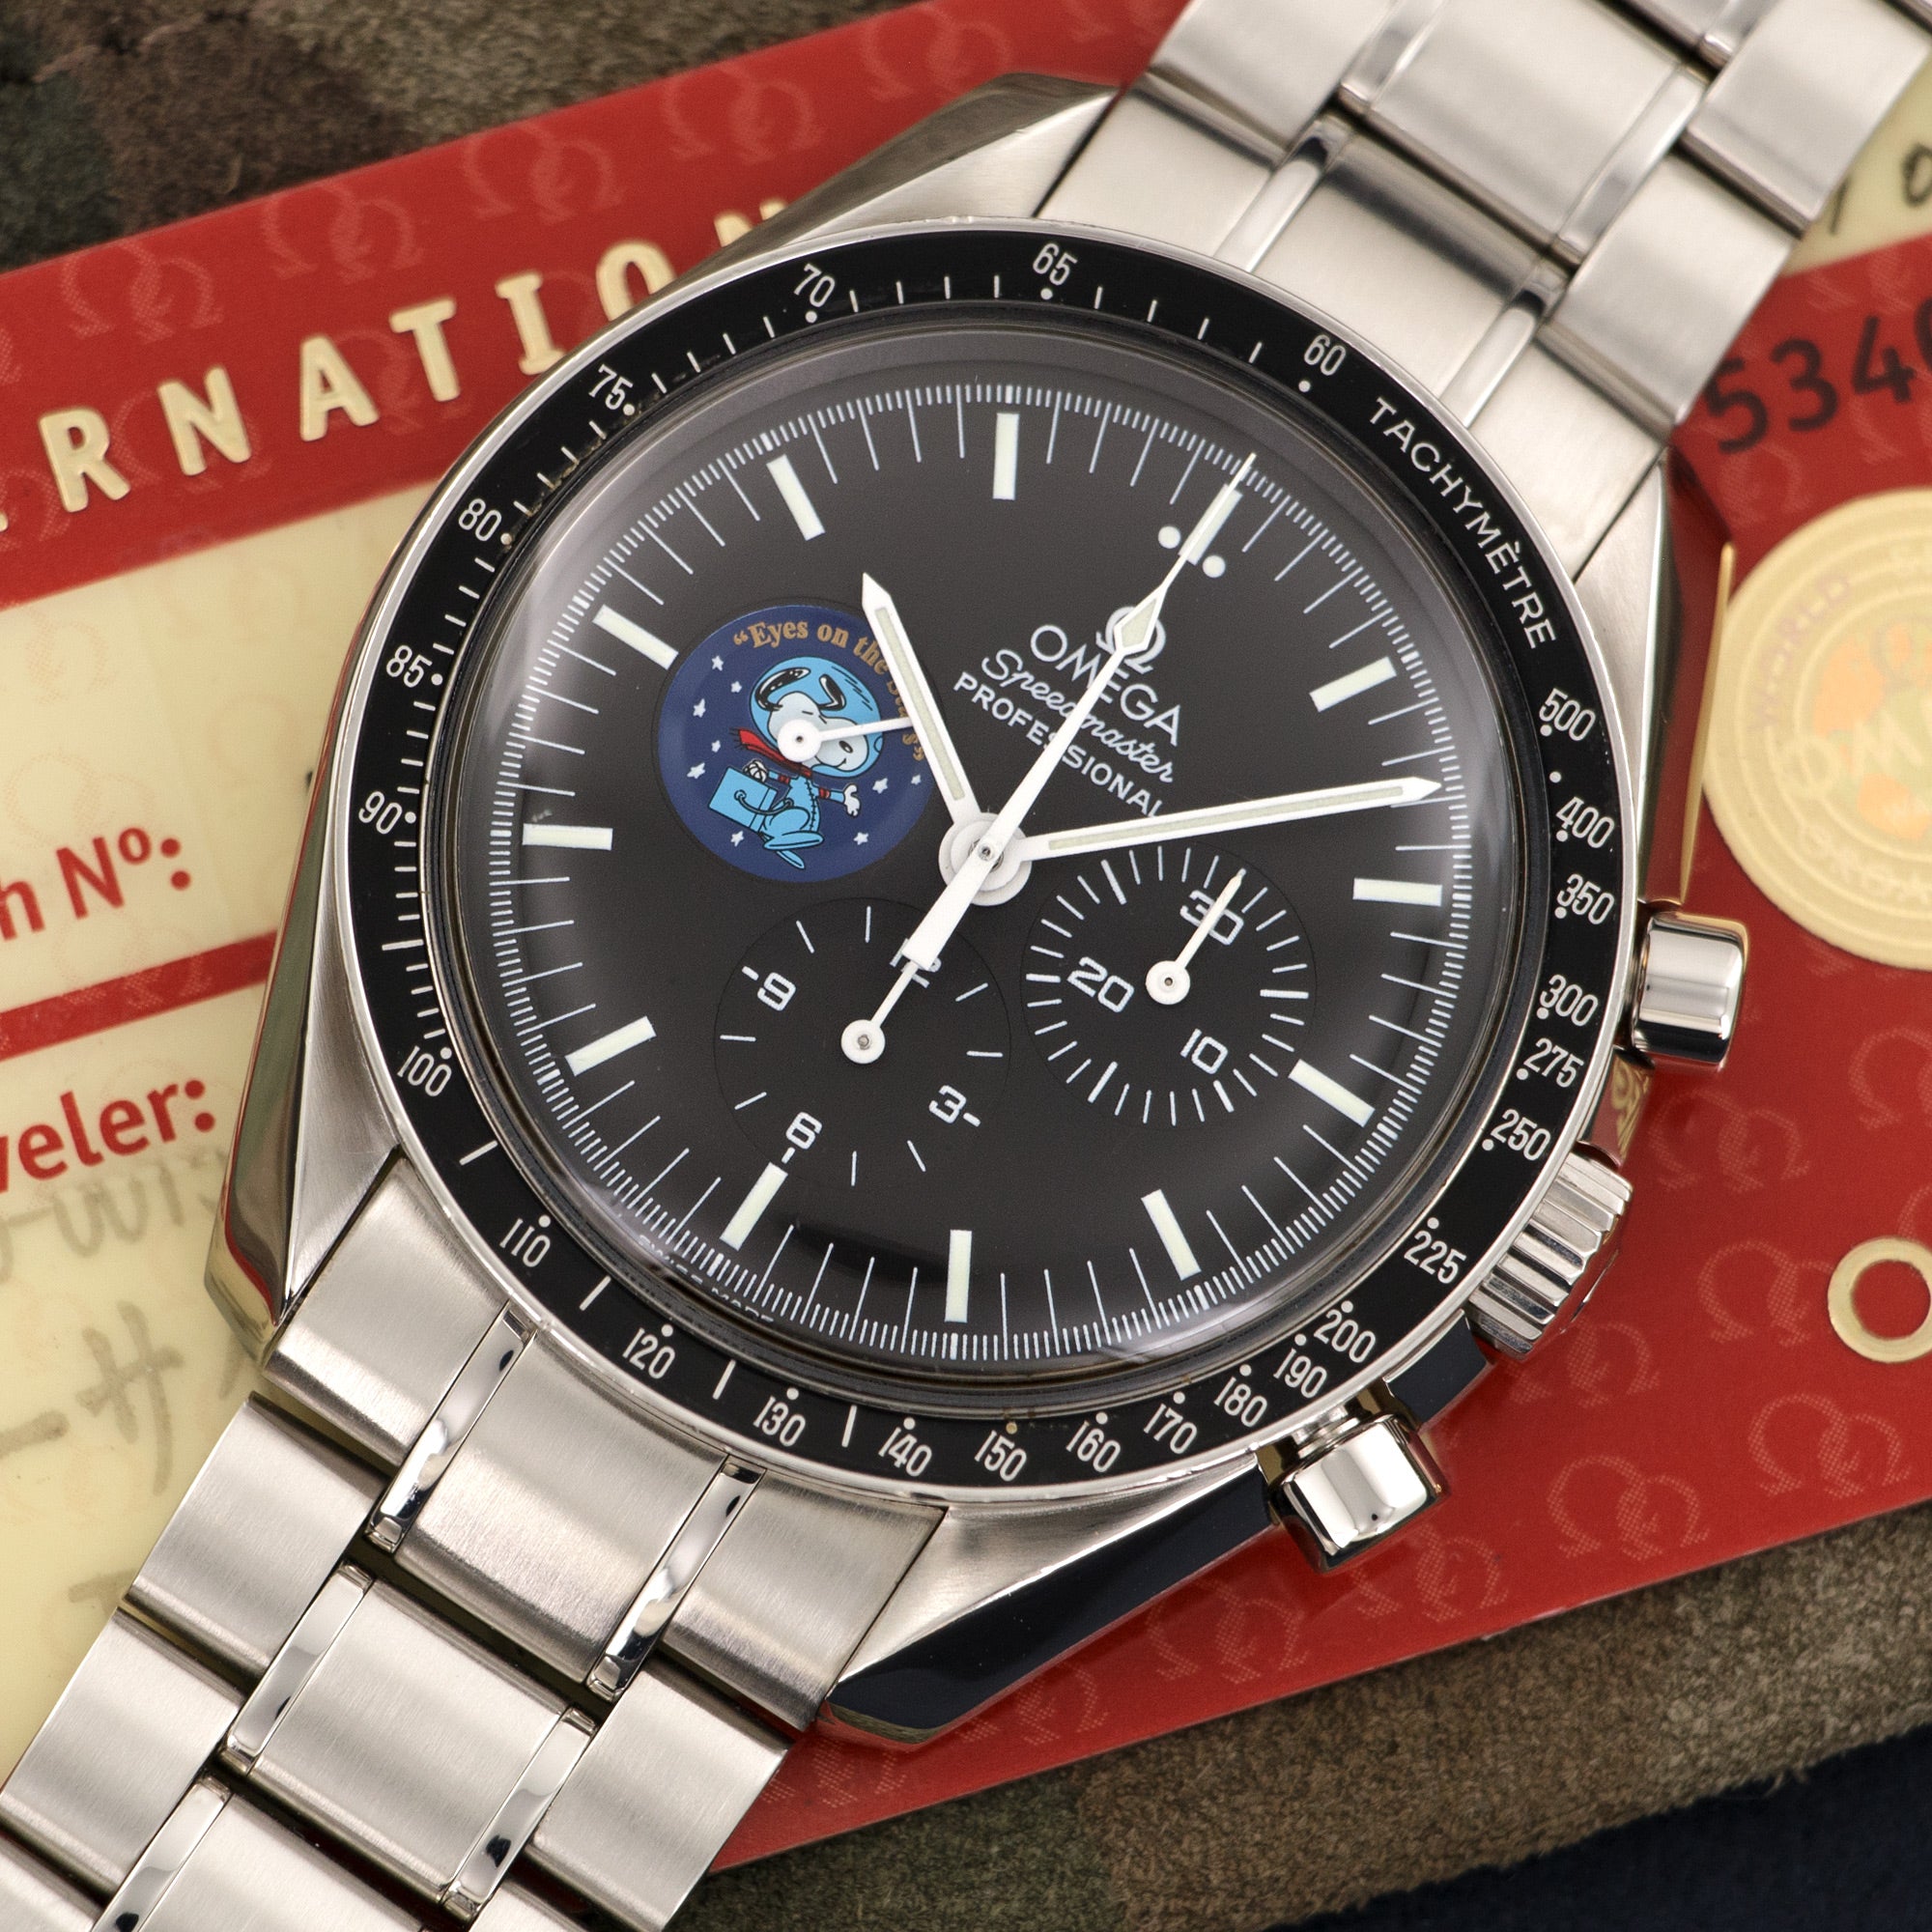 Omega - Omega Speedmaster Moonwatch Snoopy Award Ref. 3578.51.00 - The Keystone Watches